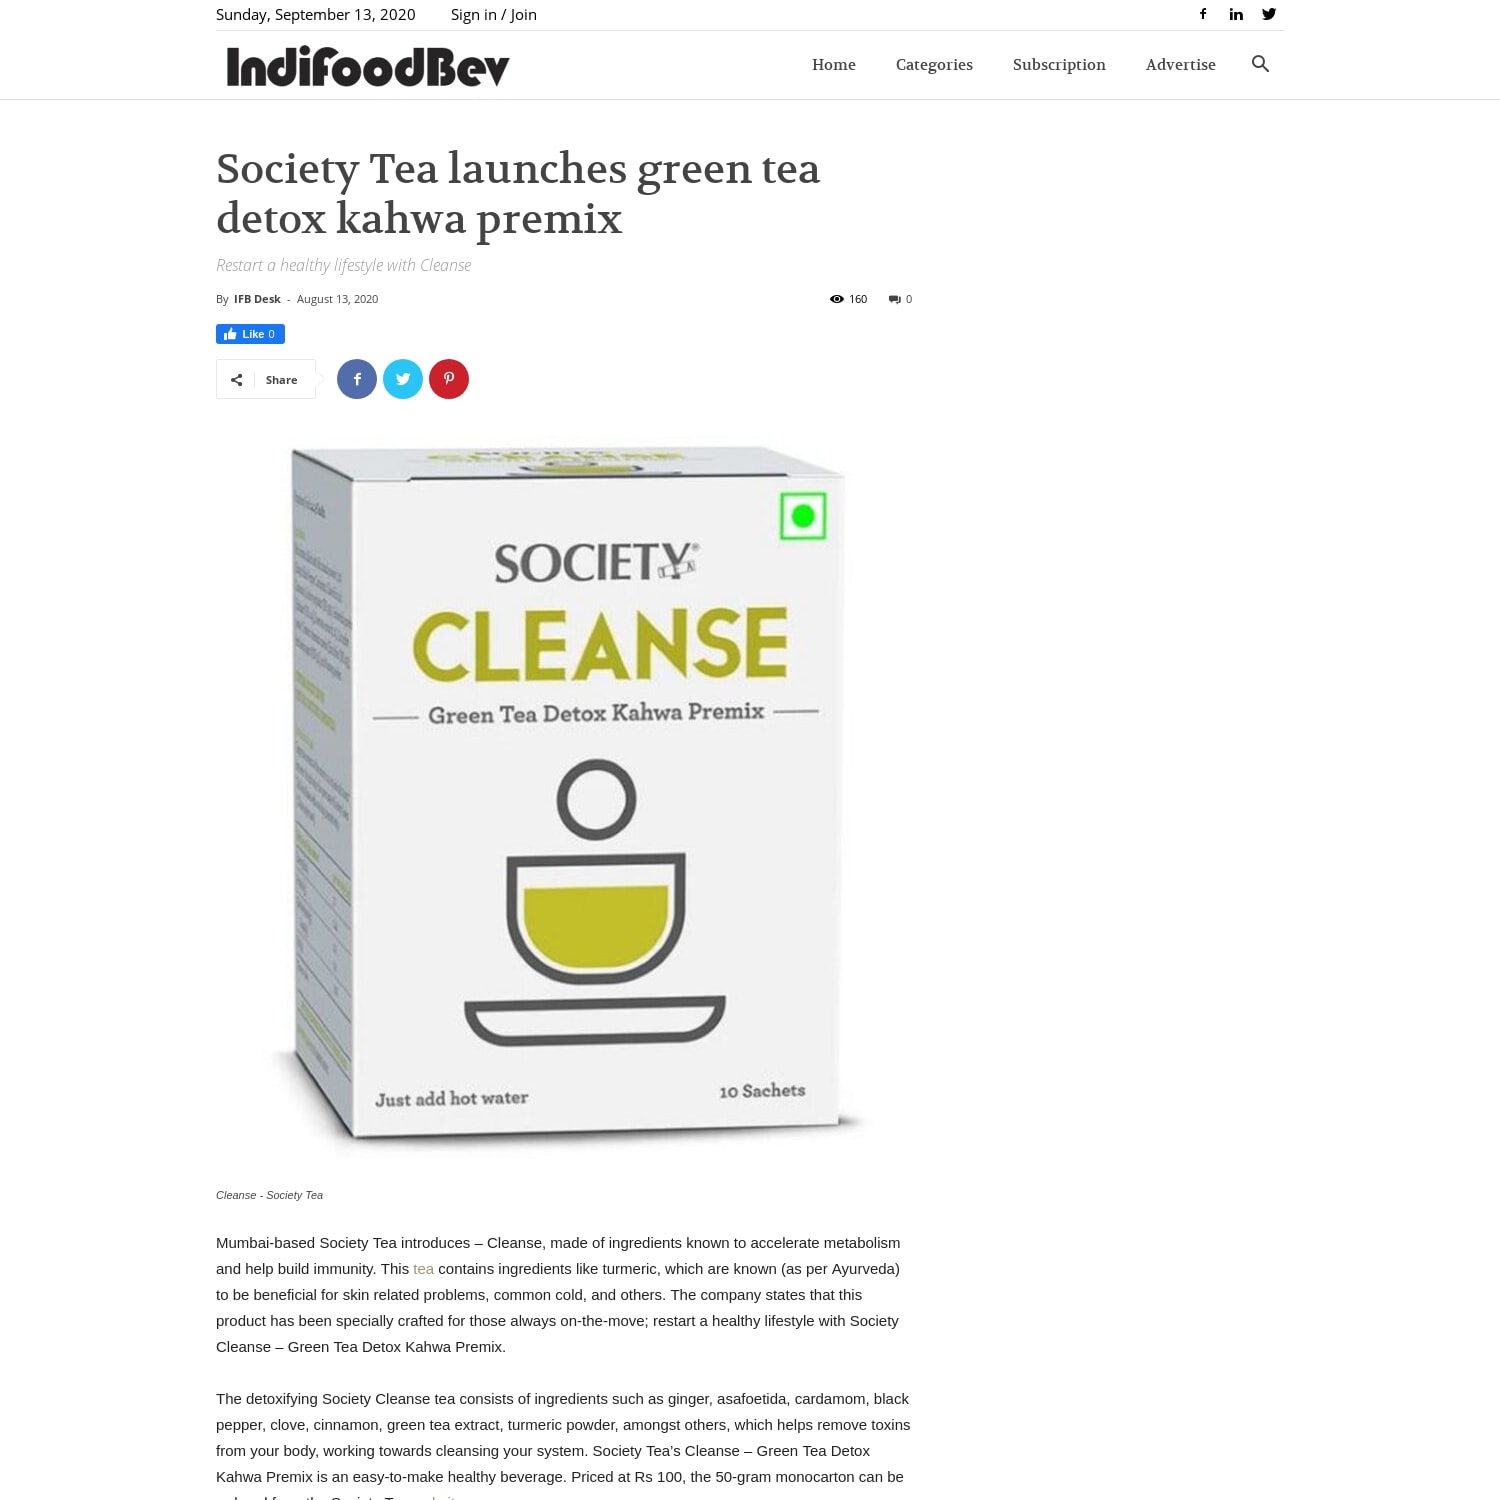 Society Tea launches green tea detox kahwa premix